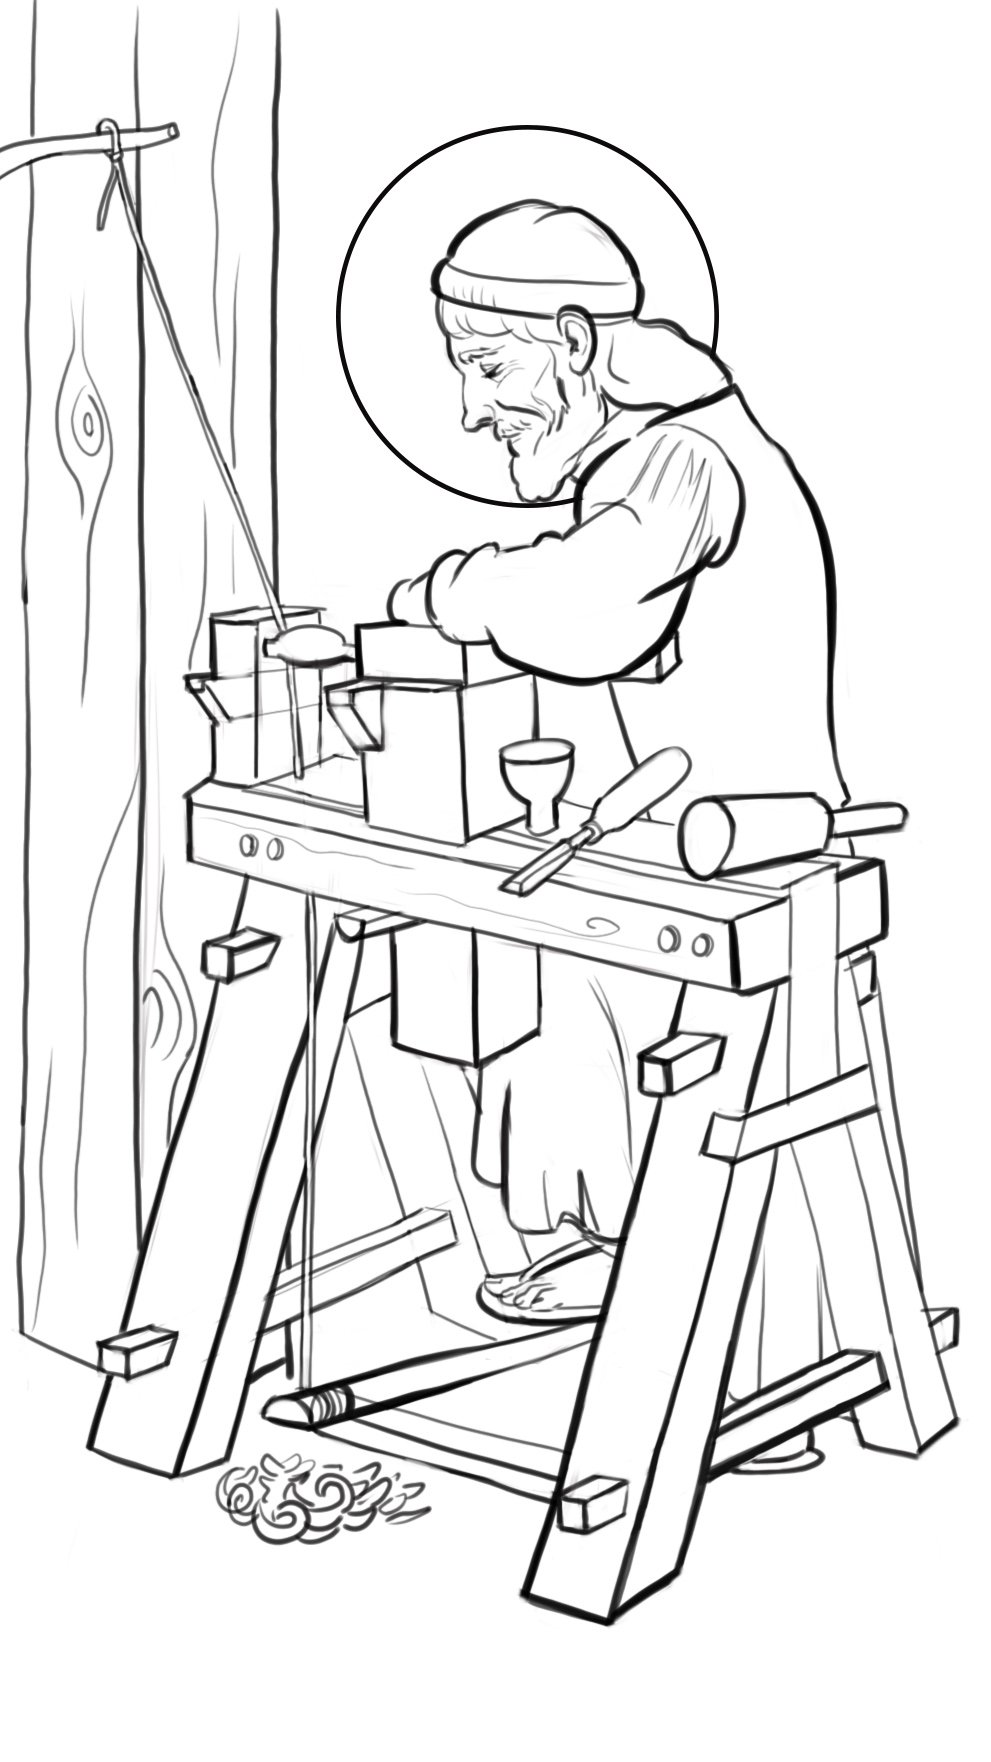 St Joseph in his workshop